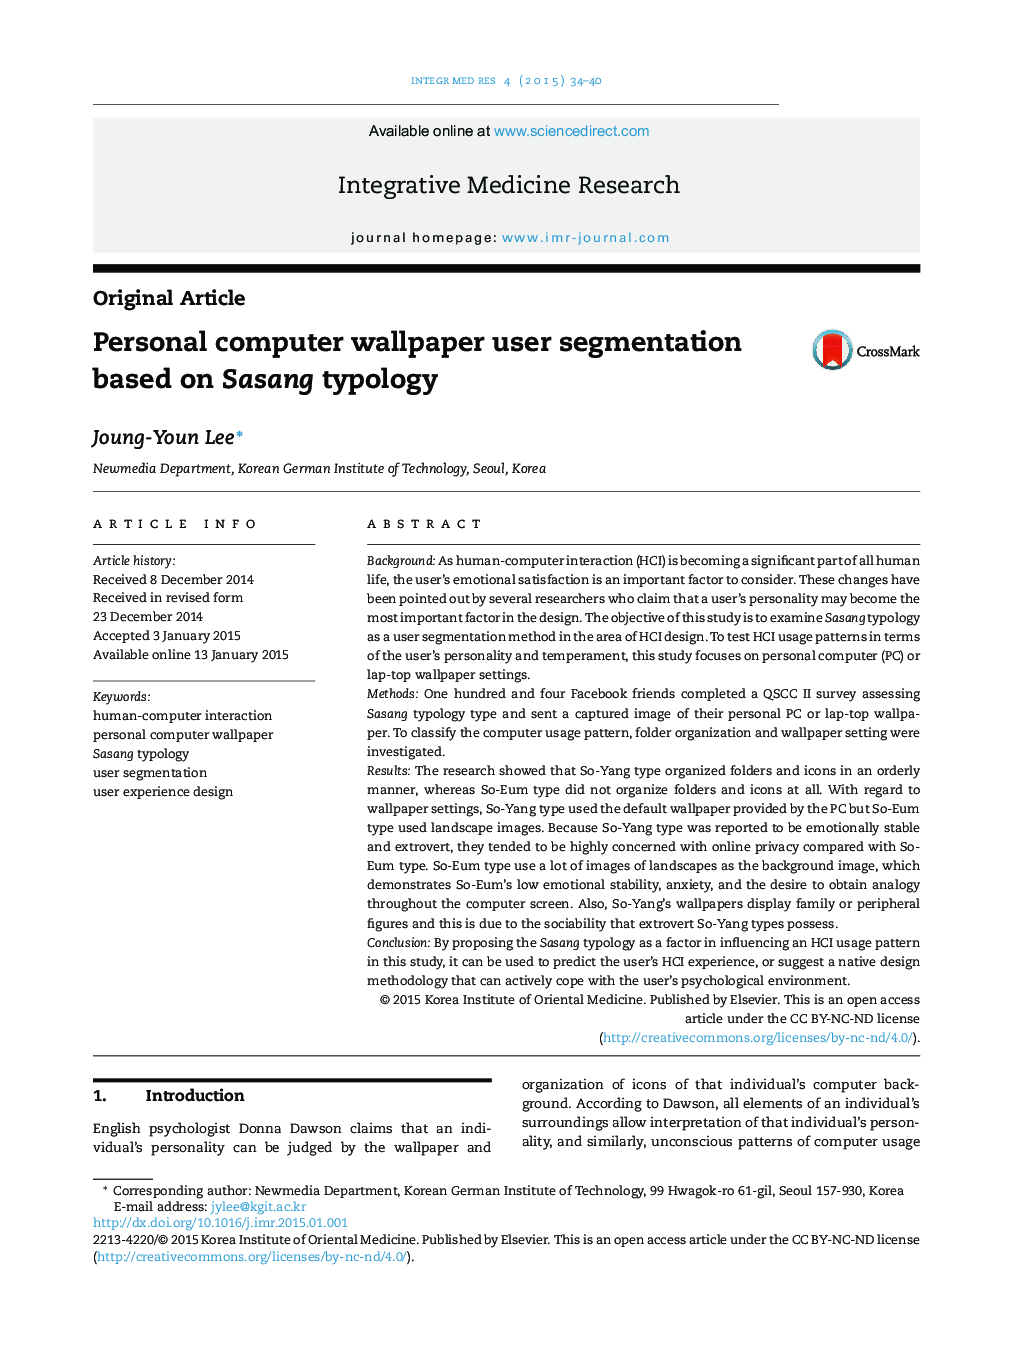 Personal computer wallpaper user segmentation based on Sasang typology